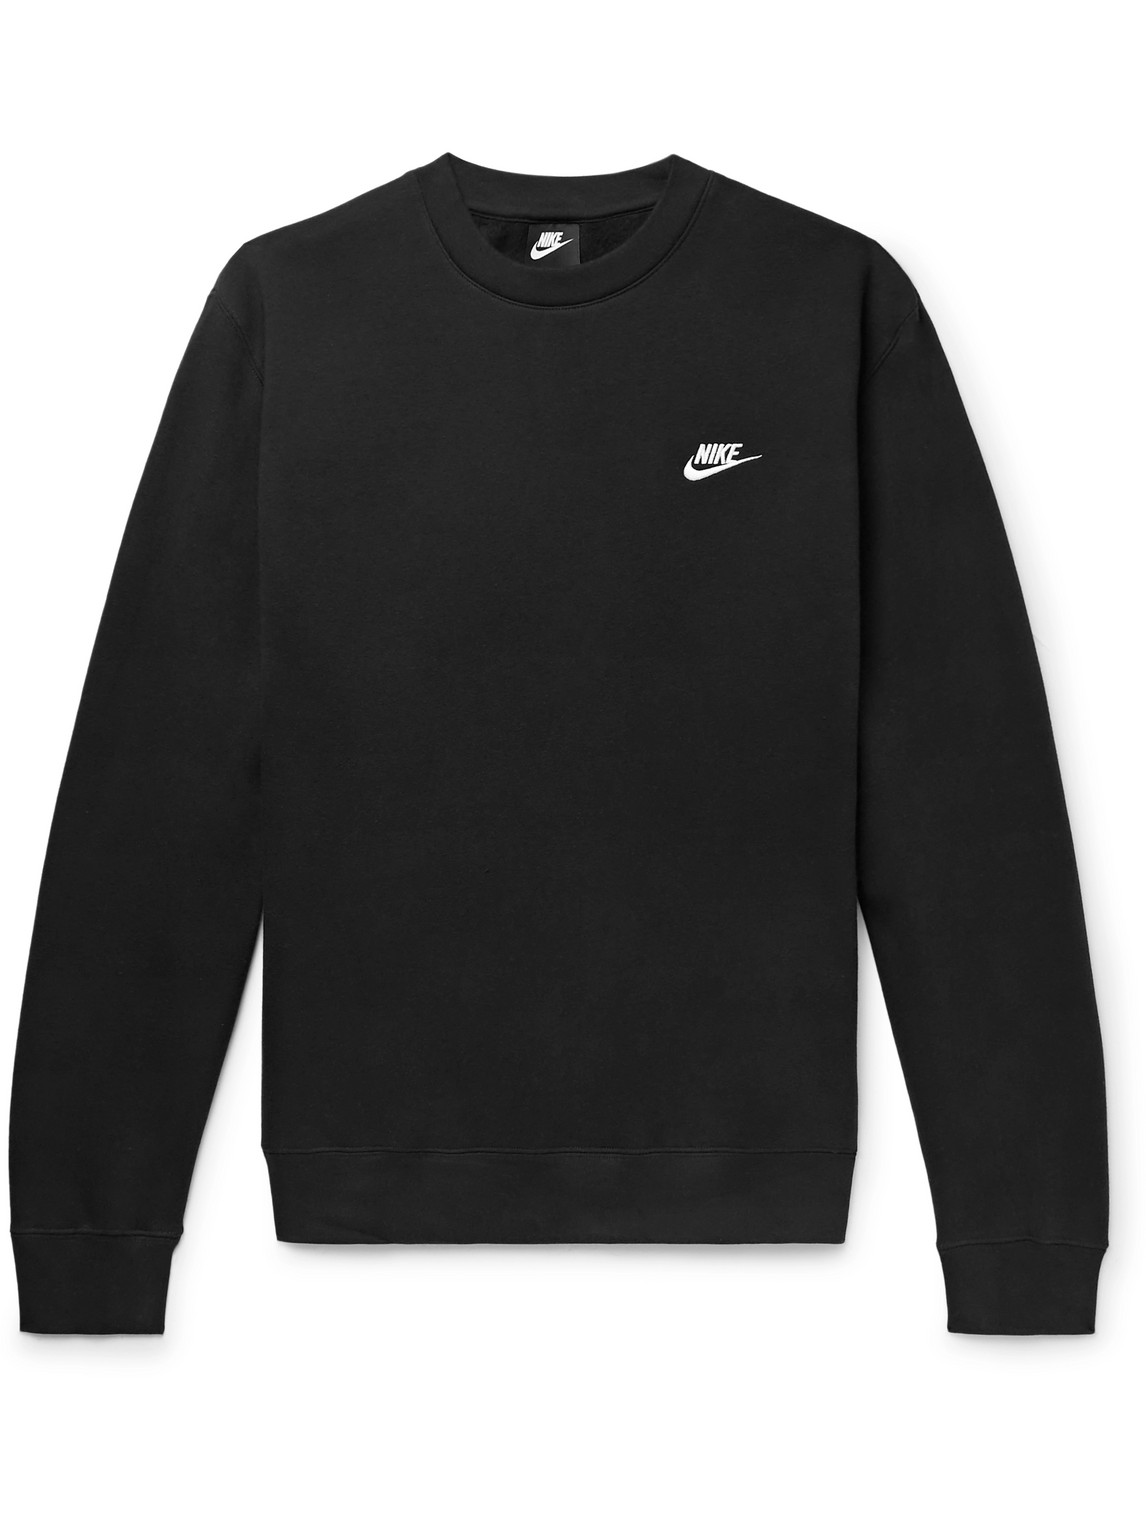 Nike - Sportswear Club Logo-Embroidered Cotton-Blend Tech Fleece Sweatshirt - Men - Black - S von Nike